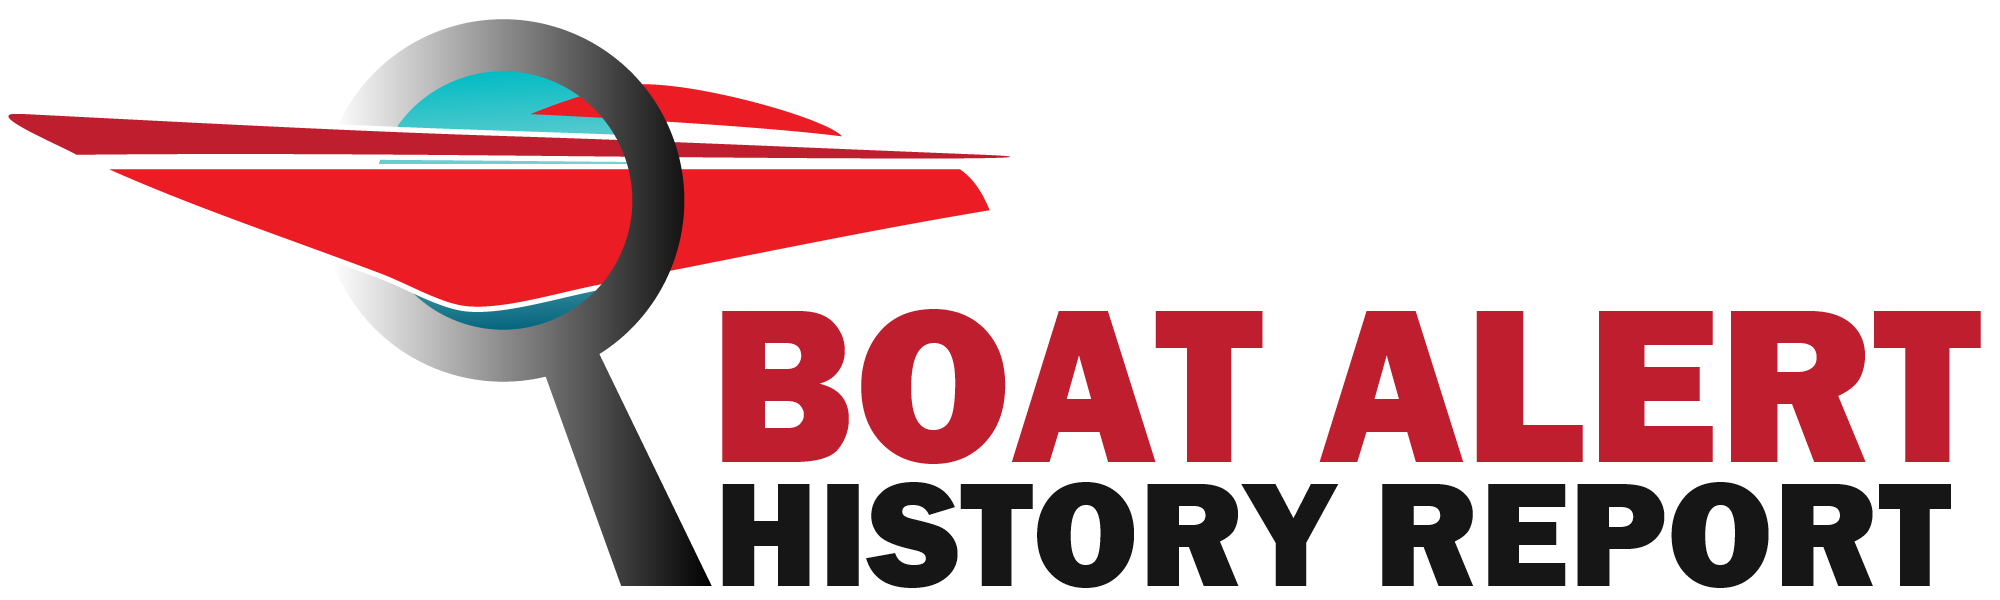 BoatAlert History Check Logo